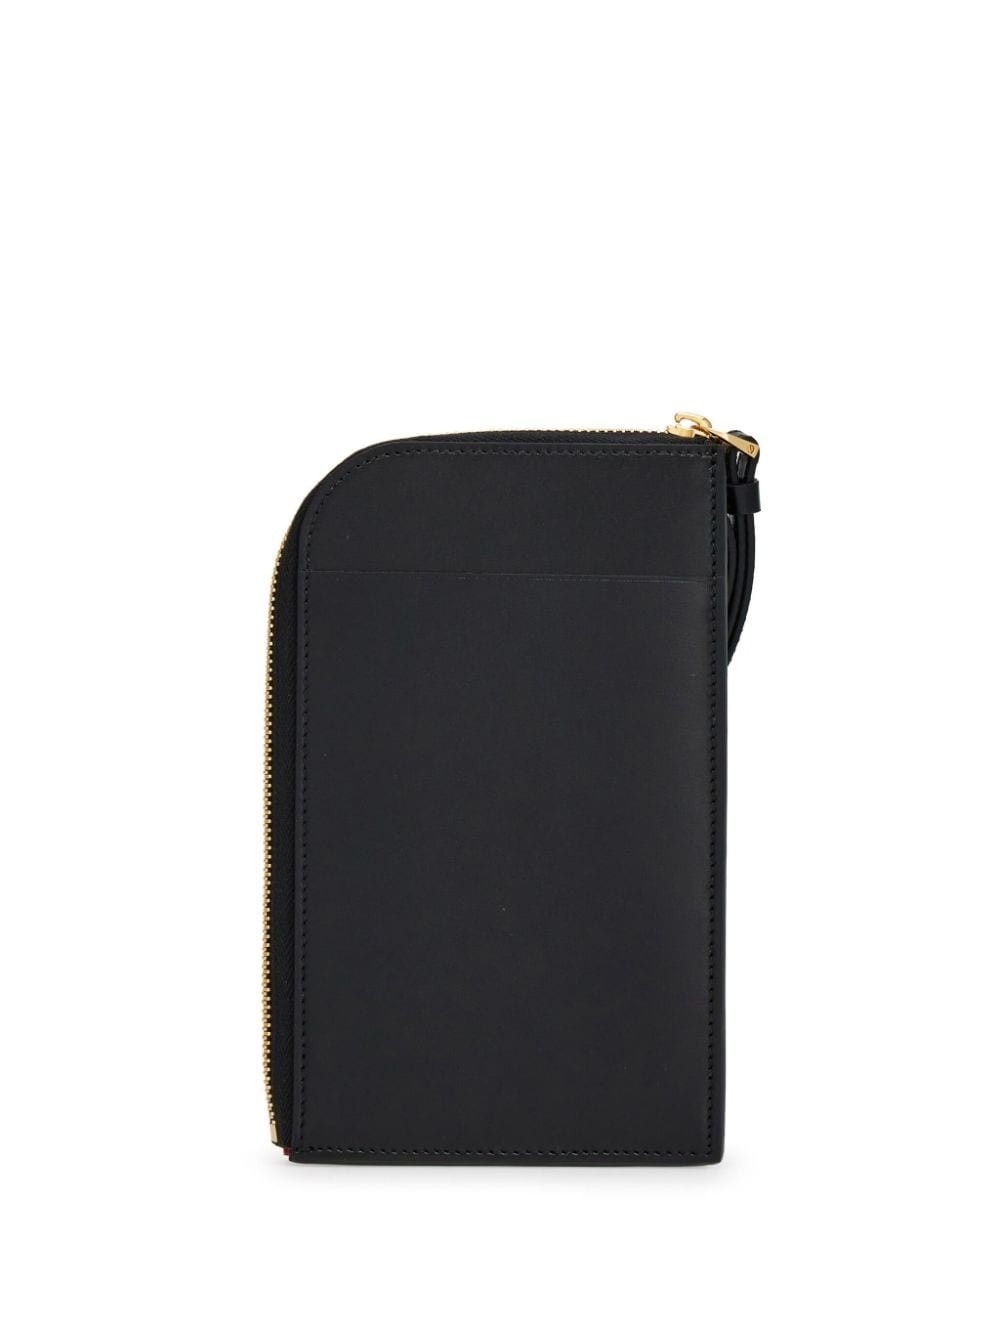 Gancini leather smartphone holder - 2